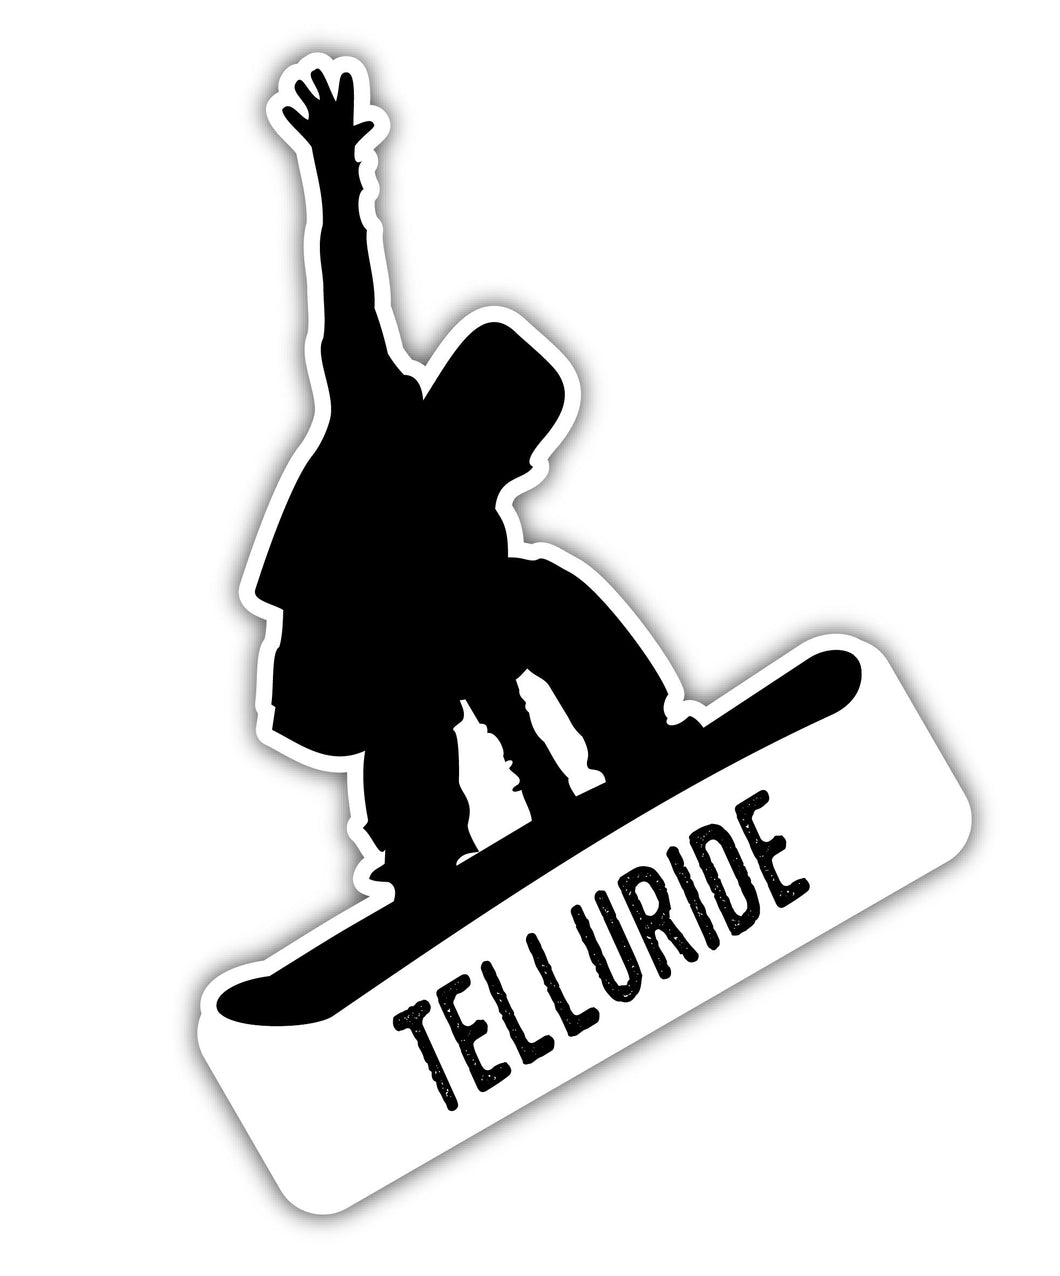 Telluride Colorado Ski Adventures Souvenir Approximately 5 x 2.5-Inch Vinyl Decal Sticker Goggle Design